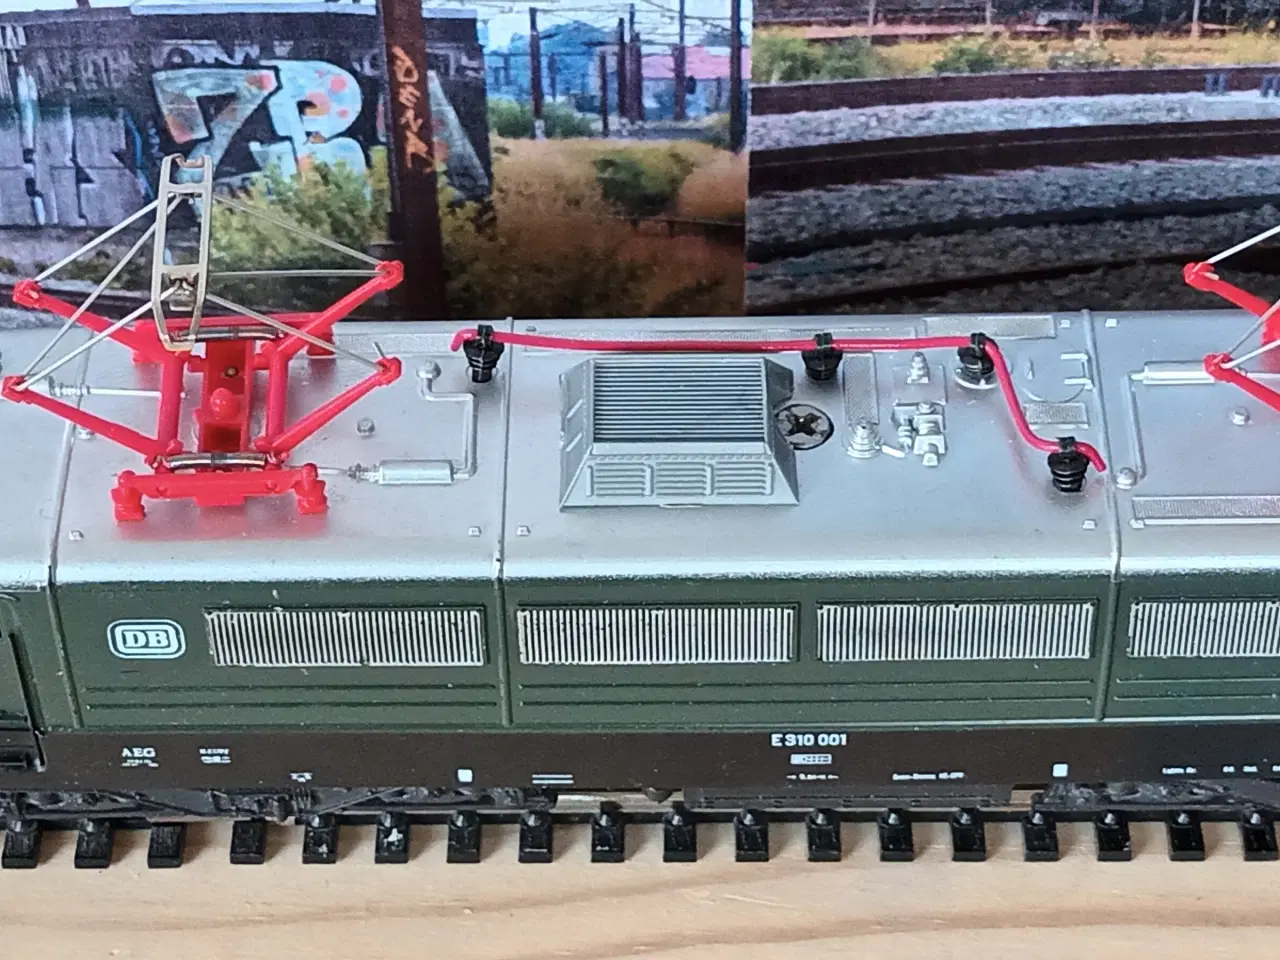 Billede 5 - Lima model: DB - lokomotiv E310 001 